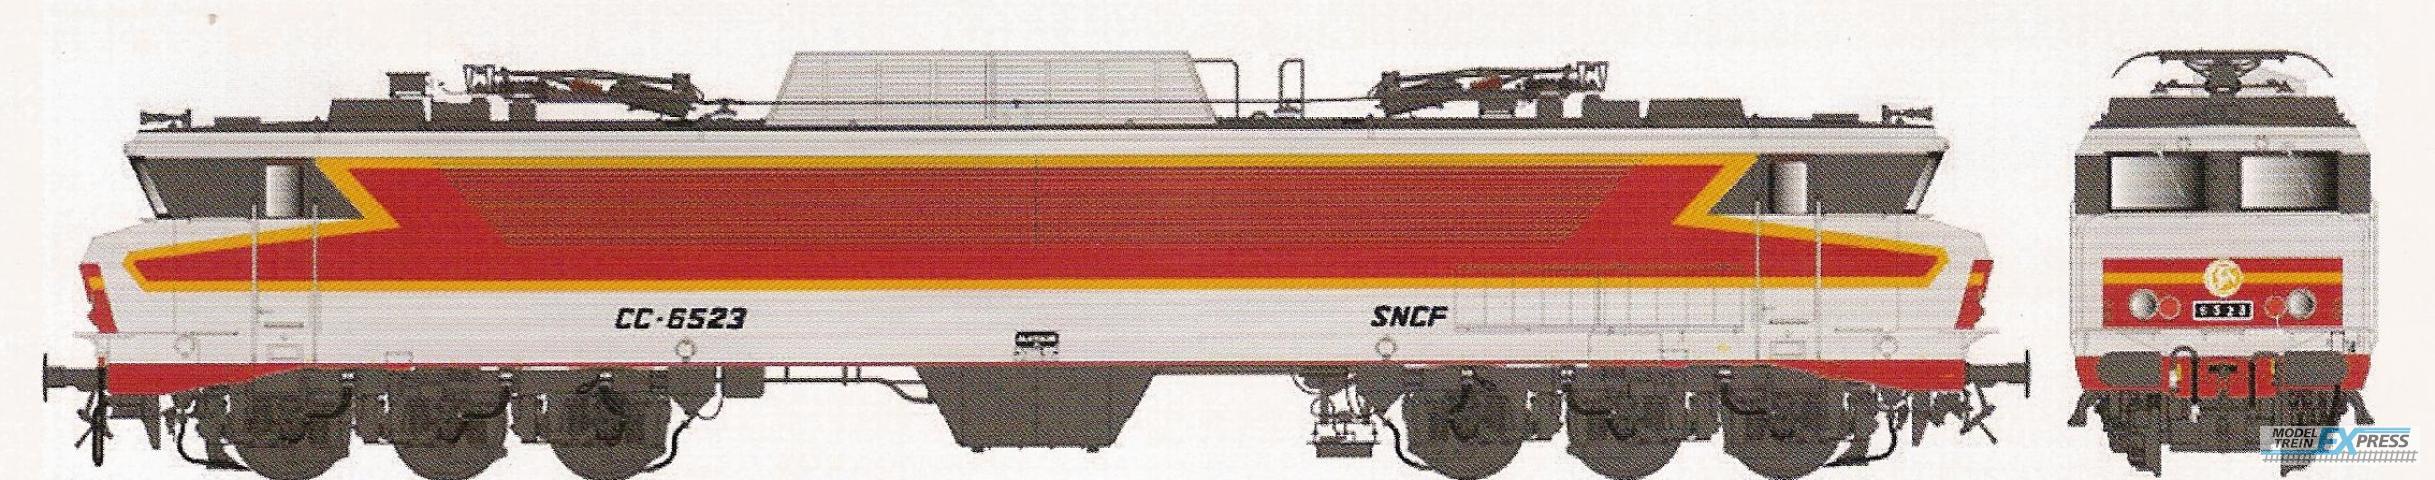 LS Models 10822S CC 6523, metaalgrijs/rood/oranje, TEE, platen, Beffara logo, zuid west, 200 km/h  /  Ep. IV  /  SNCF  /  HO  /  AC SOUND  /  1 P.